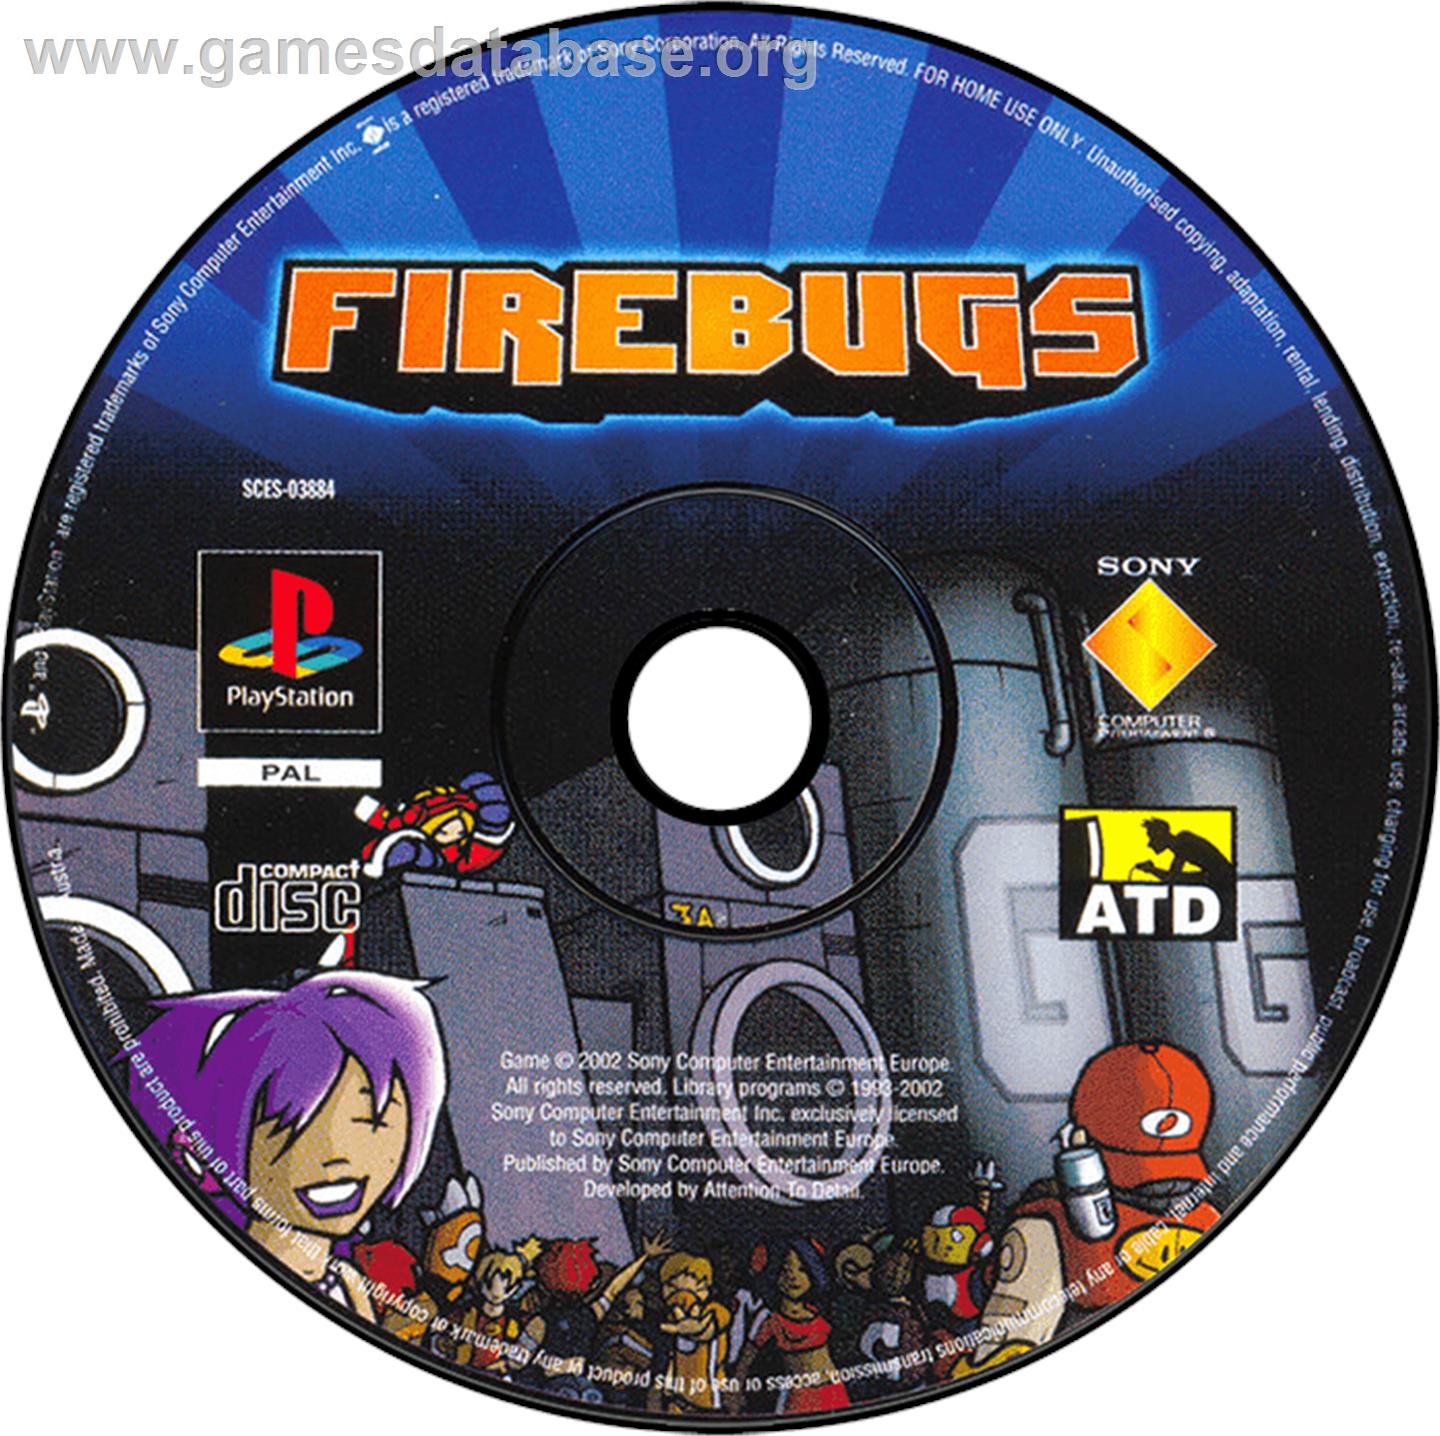 Firebugs - Sony Playstation - Artwork - Disc